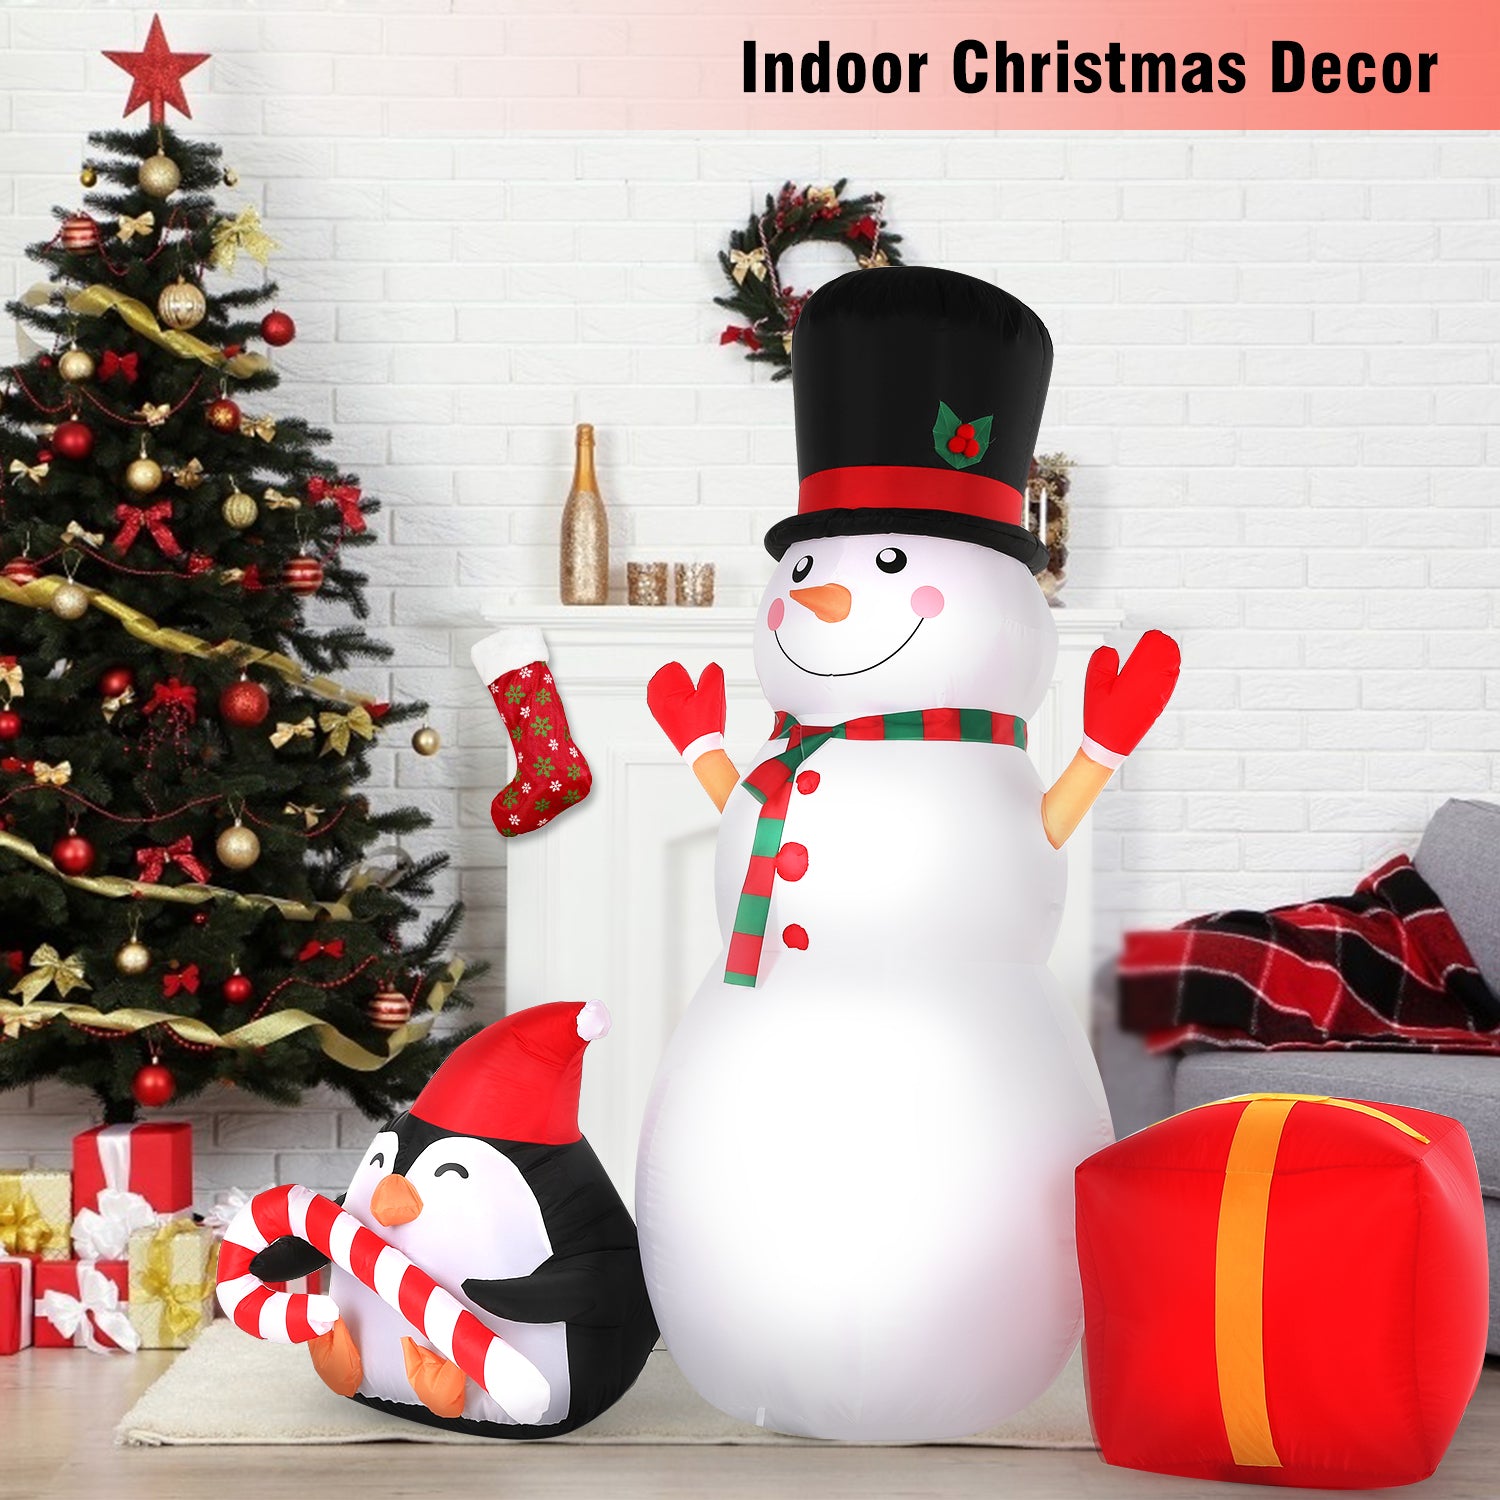 SOLEDI 6 FT Christmas Inflatables Giant Snowman Penguin